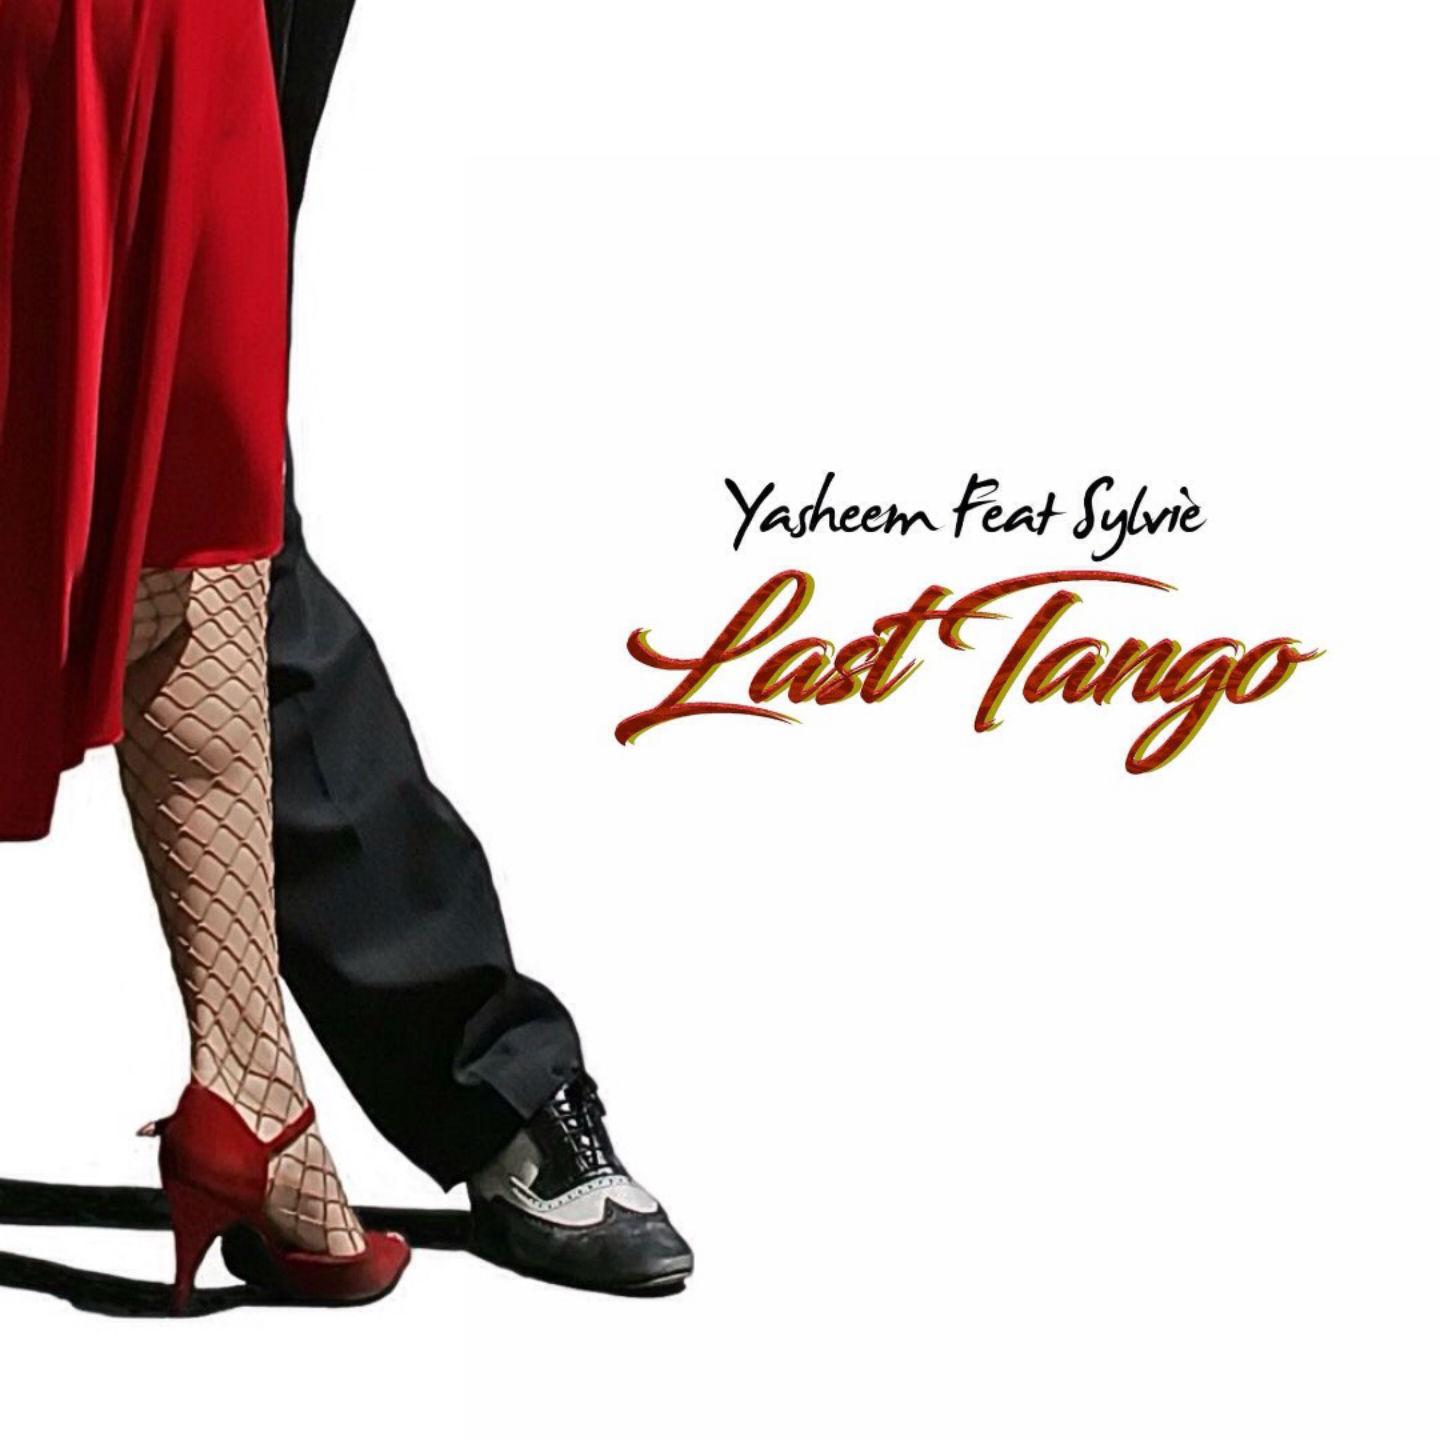 Last Tango (AlexSalis Passion Mix)